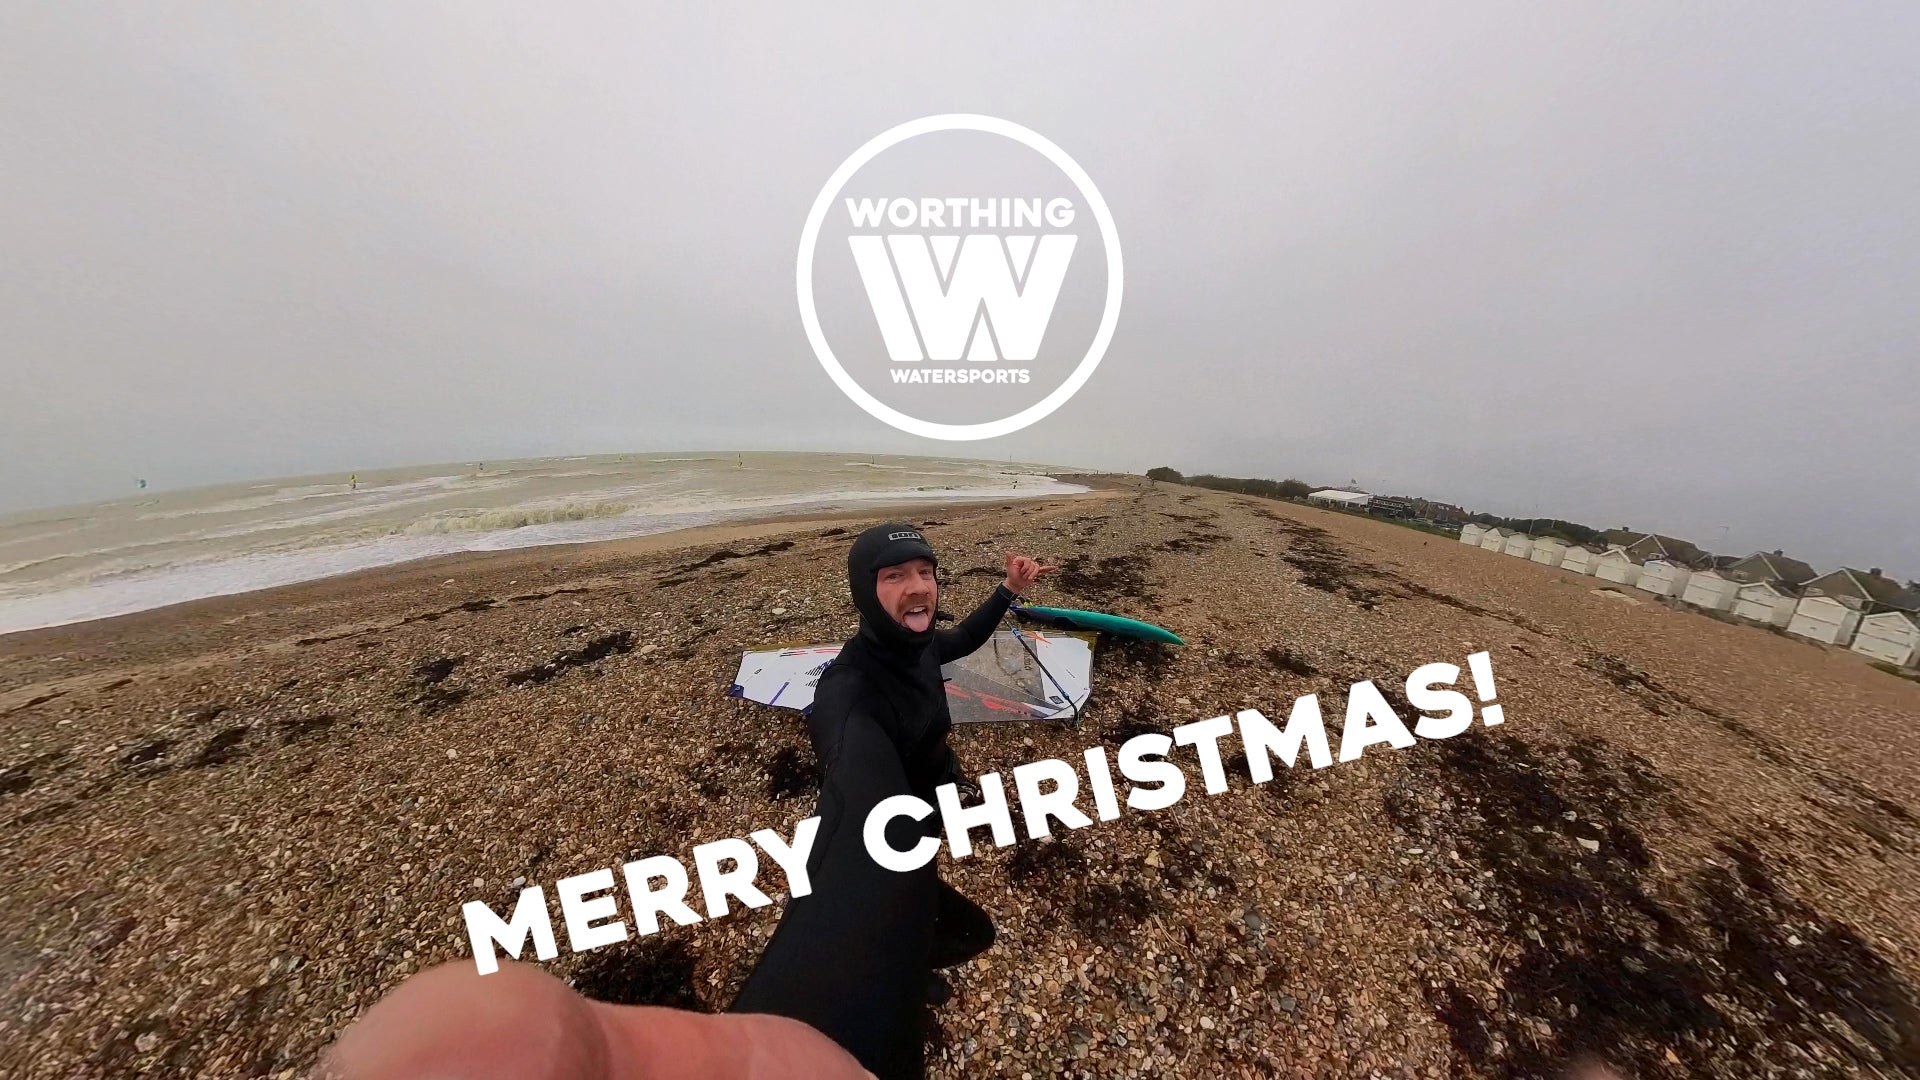 Merry-XMAS-Windsurfing-Video-Worthing-Watersports